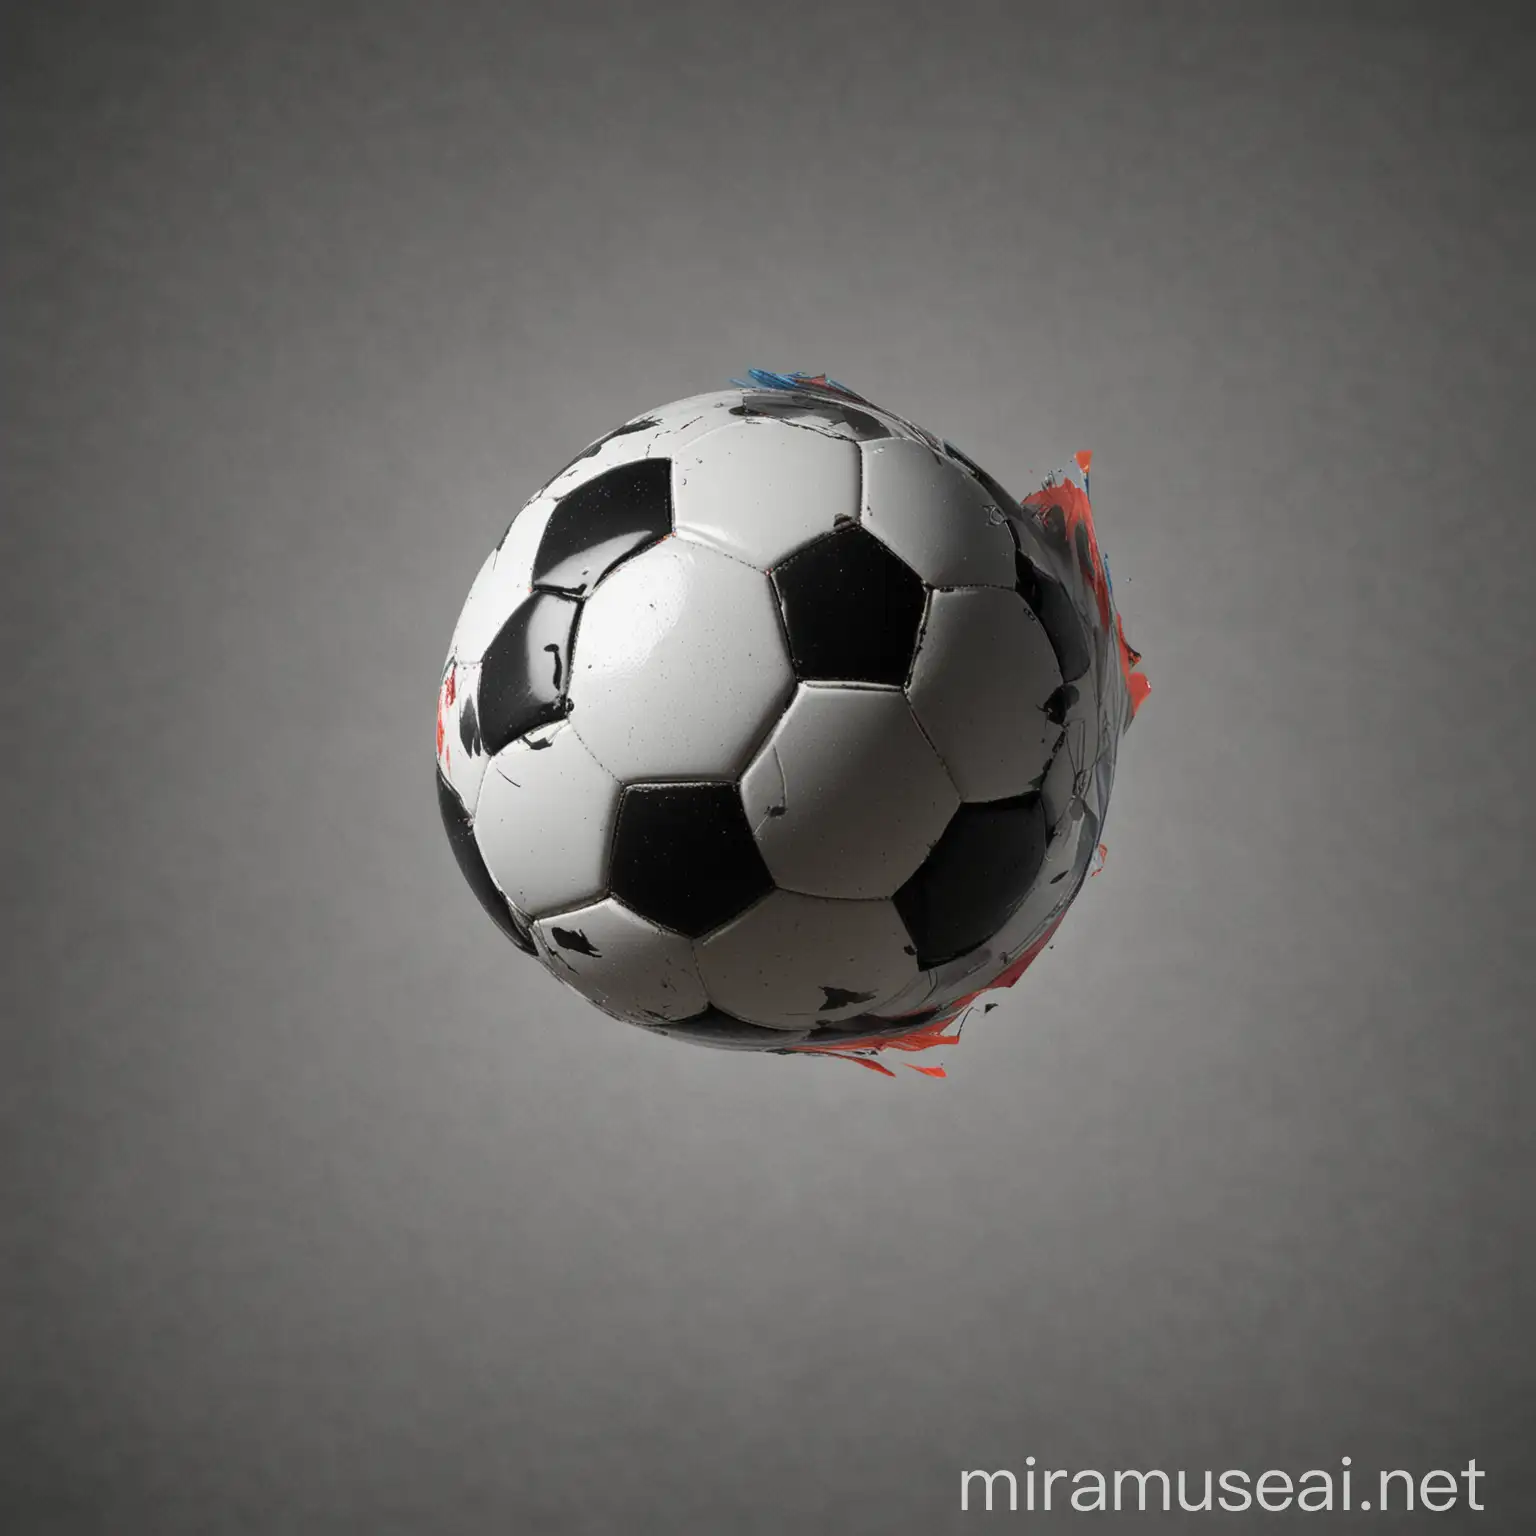 Soccer Ball Kicked Upward in Action